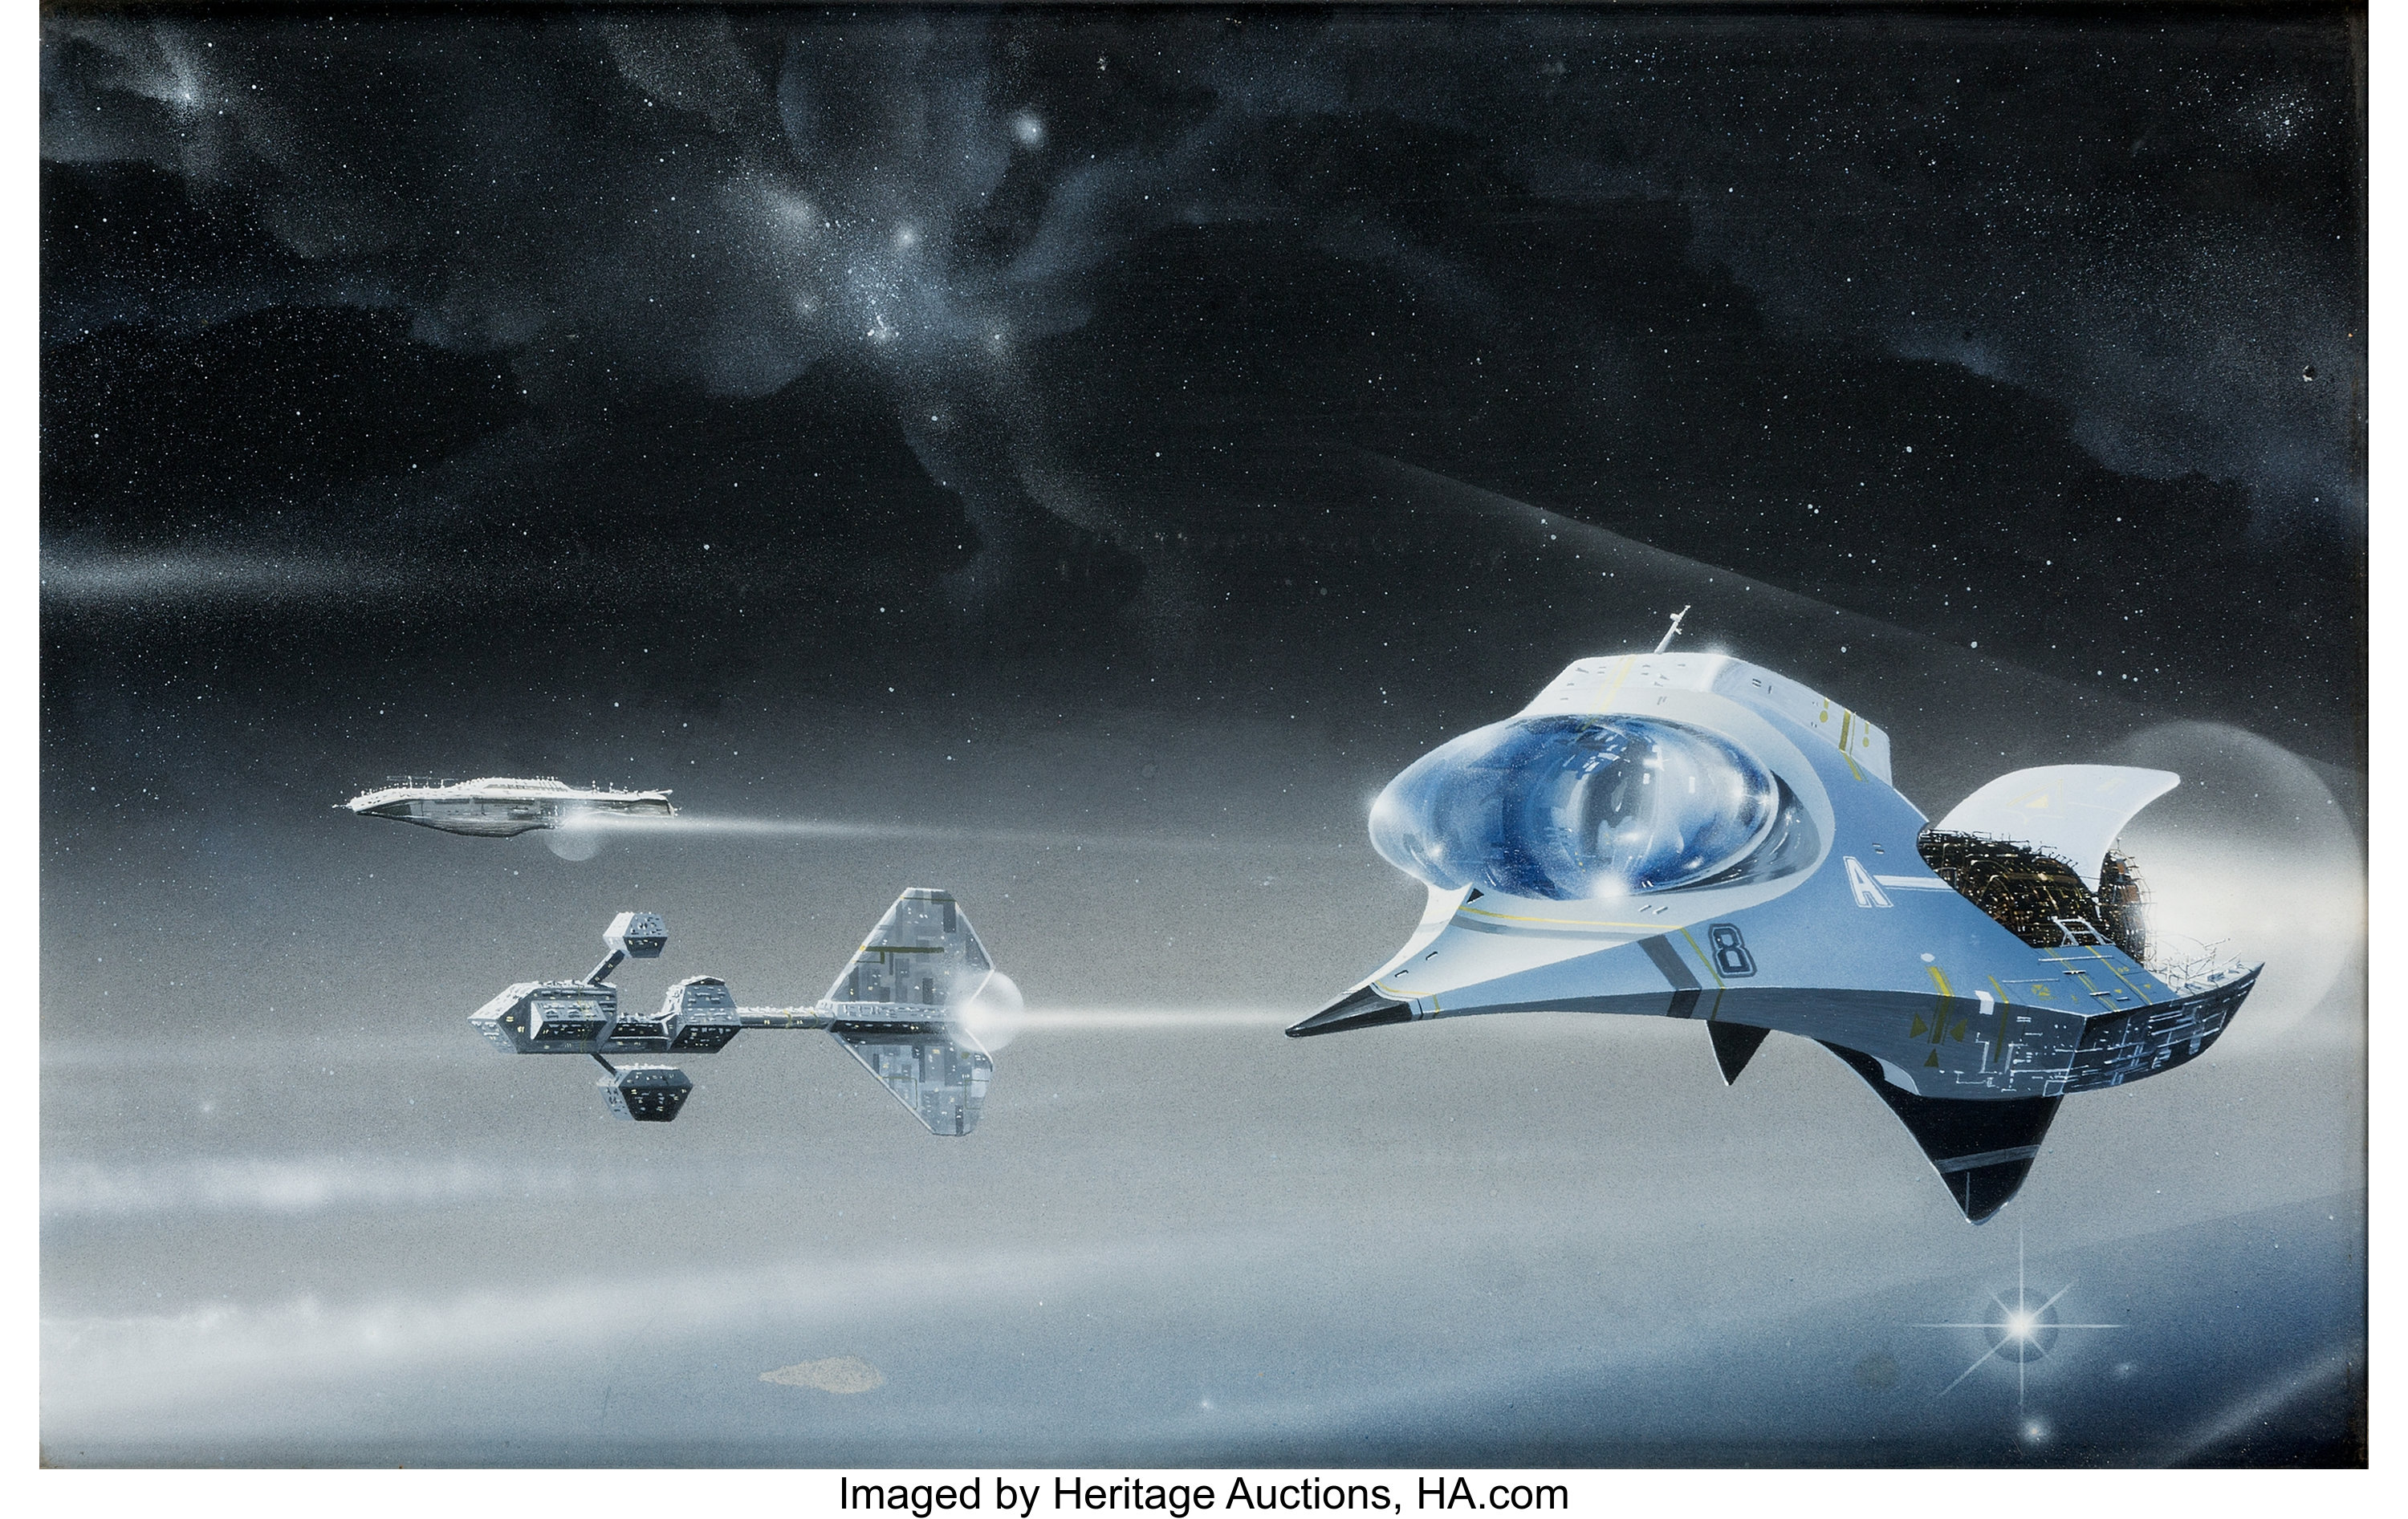 1960s spacecraft concepts